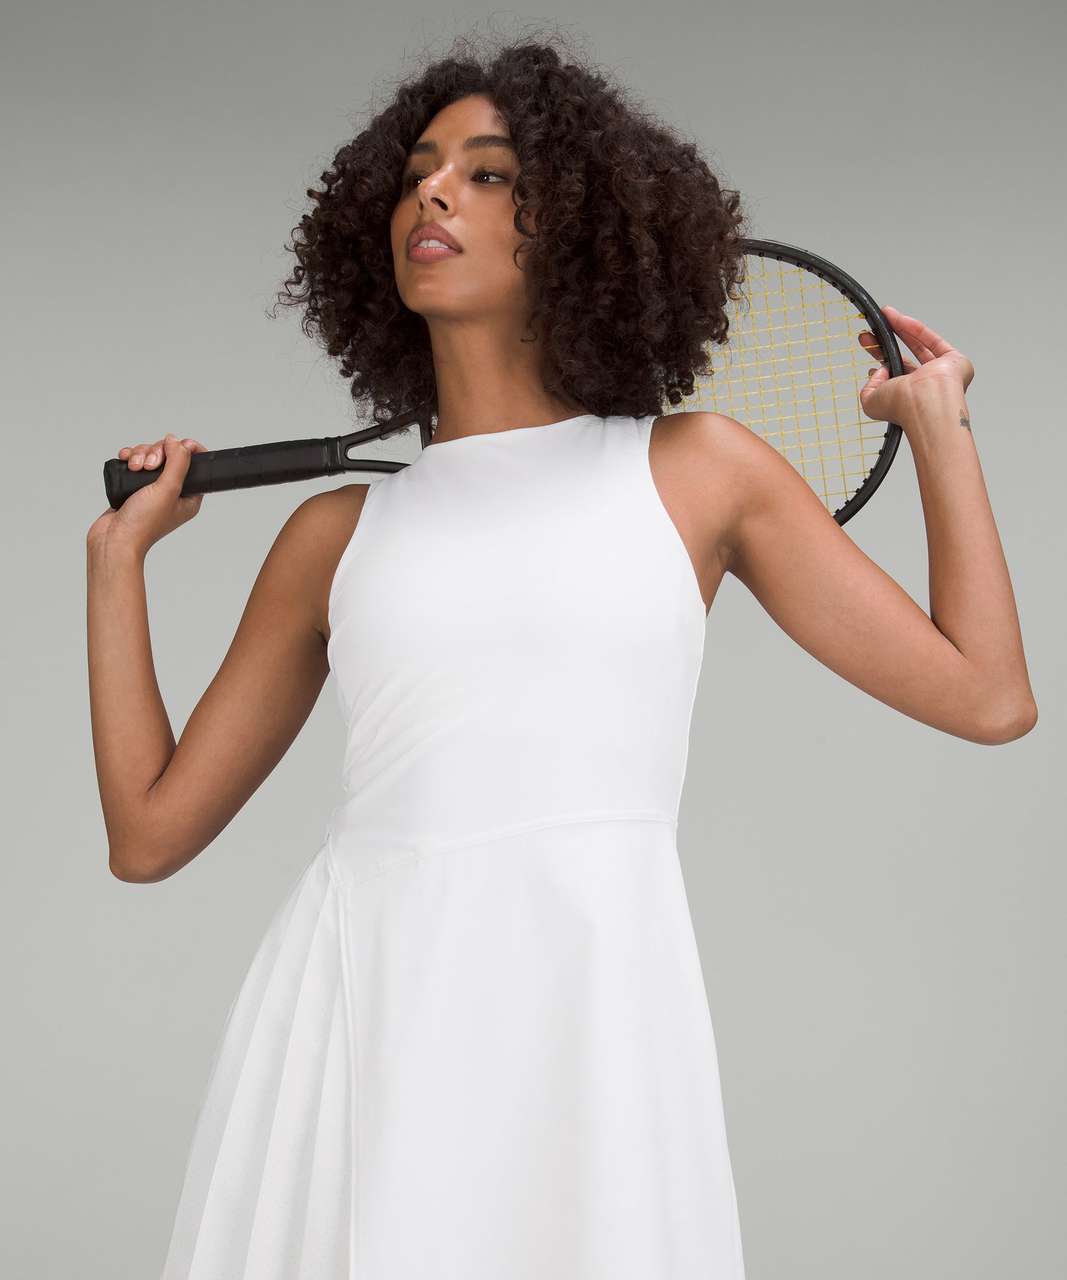 Lululemon Nulux Asymmetrical Tennis Dress - White